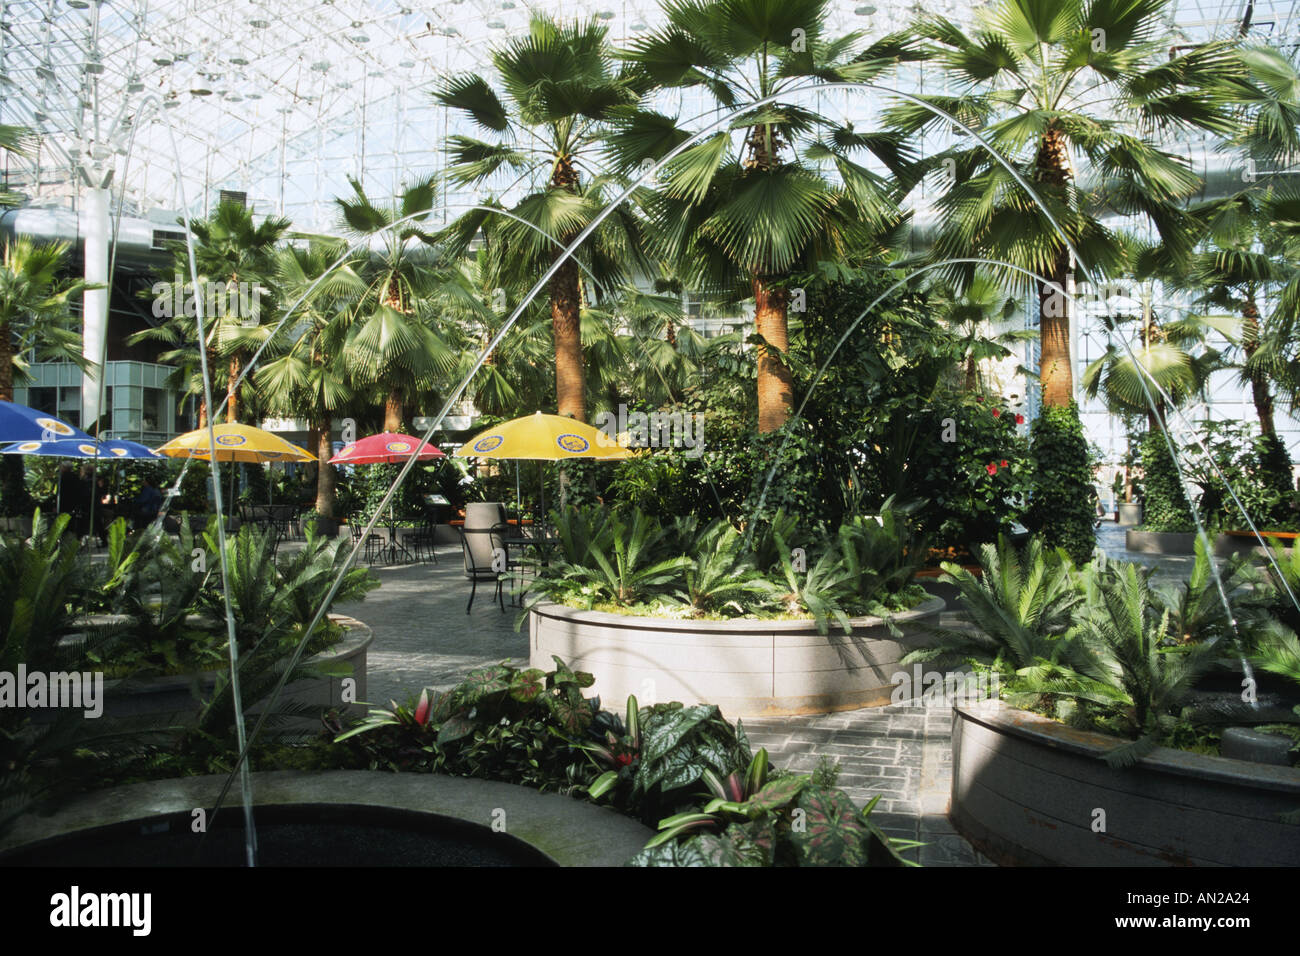 Navy Pier Chicago Illinois Crystal Garden Indoor Garden Palm Trees